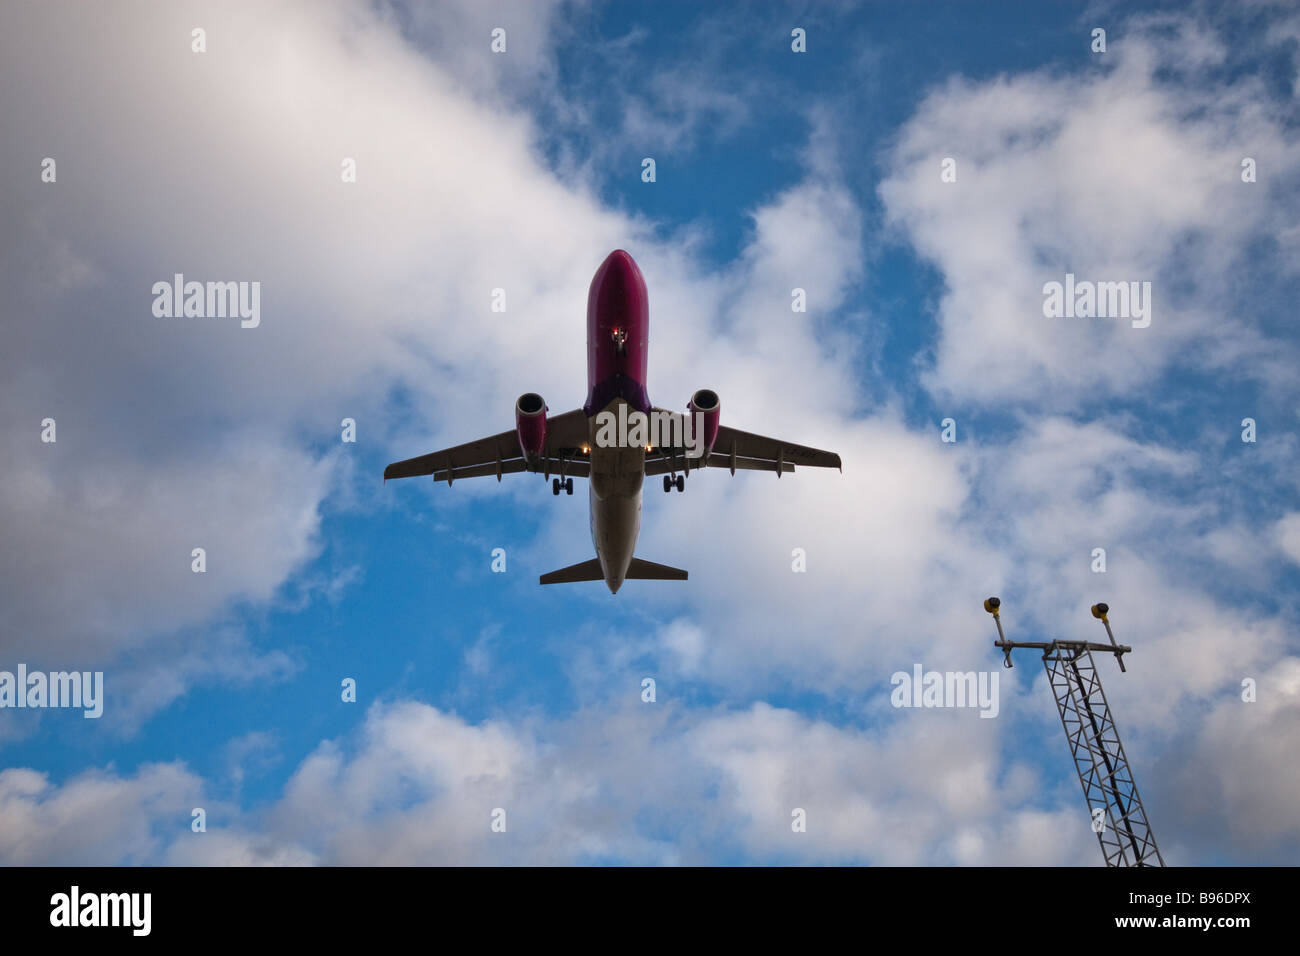 Aircraft landing at Luton Airport Stock Photo